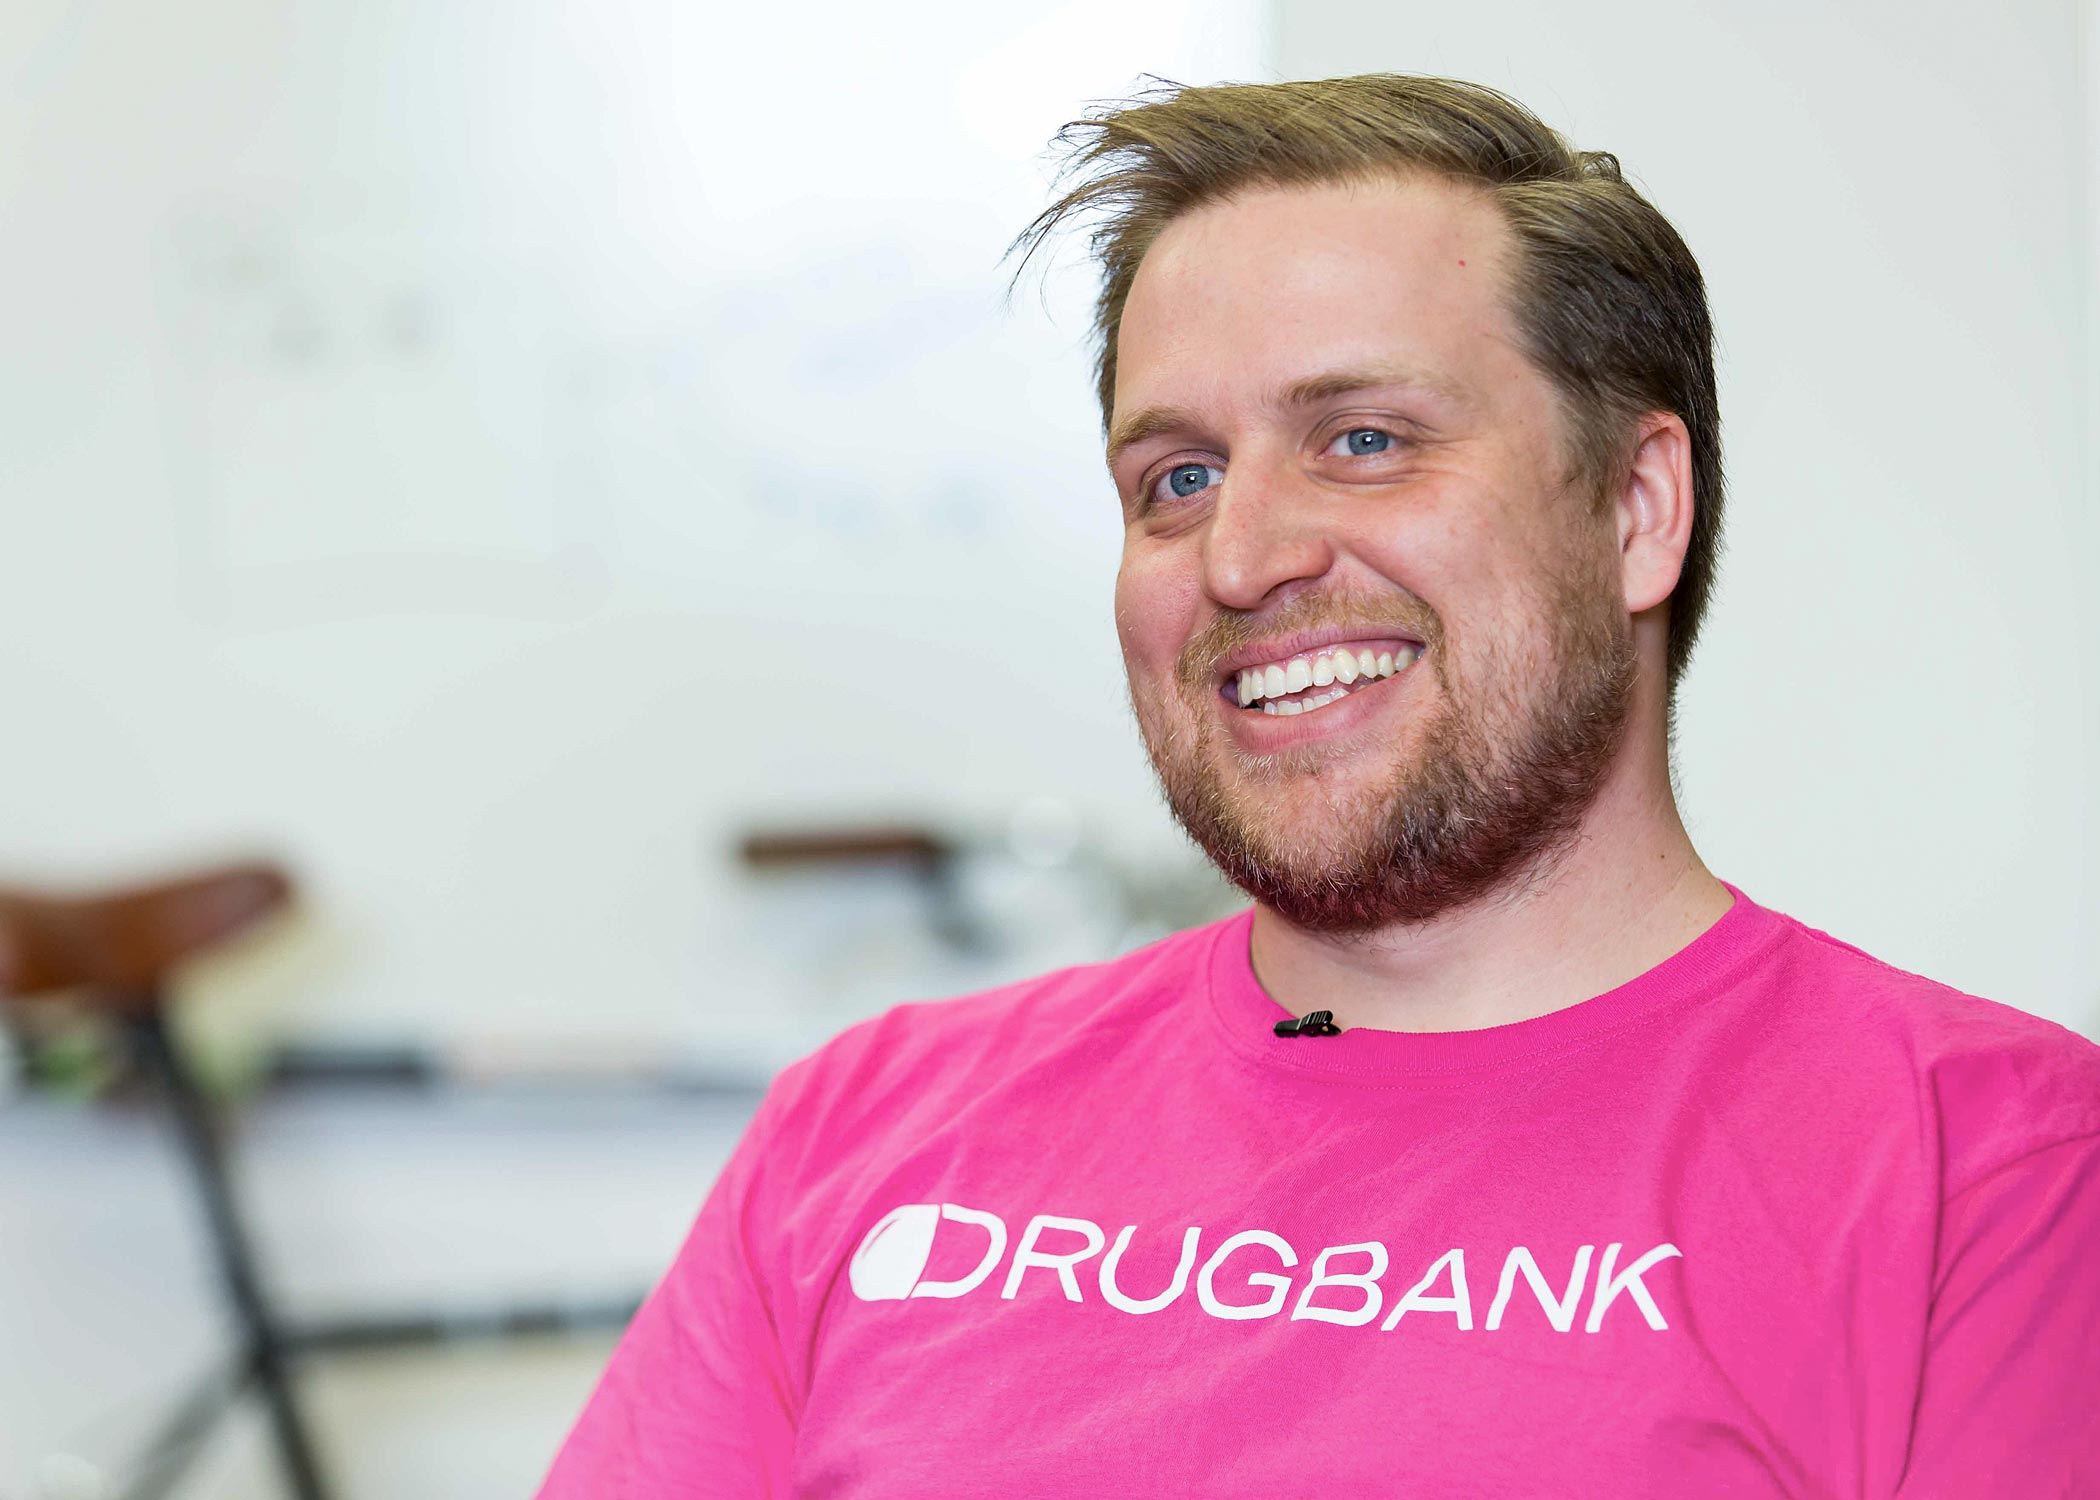 DrugBank CEO Michael Wilson